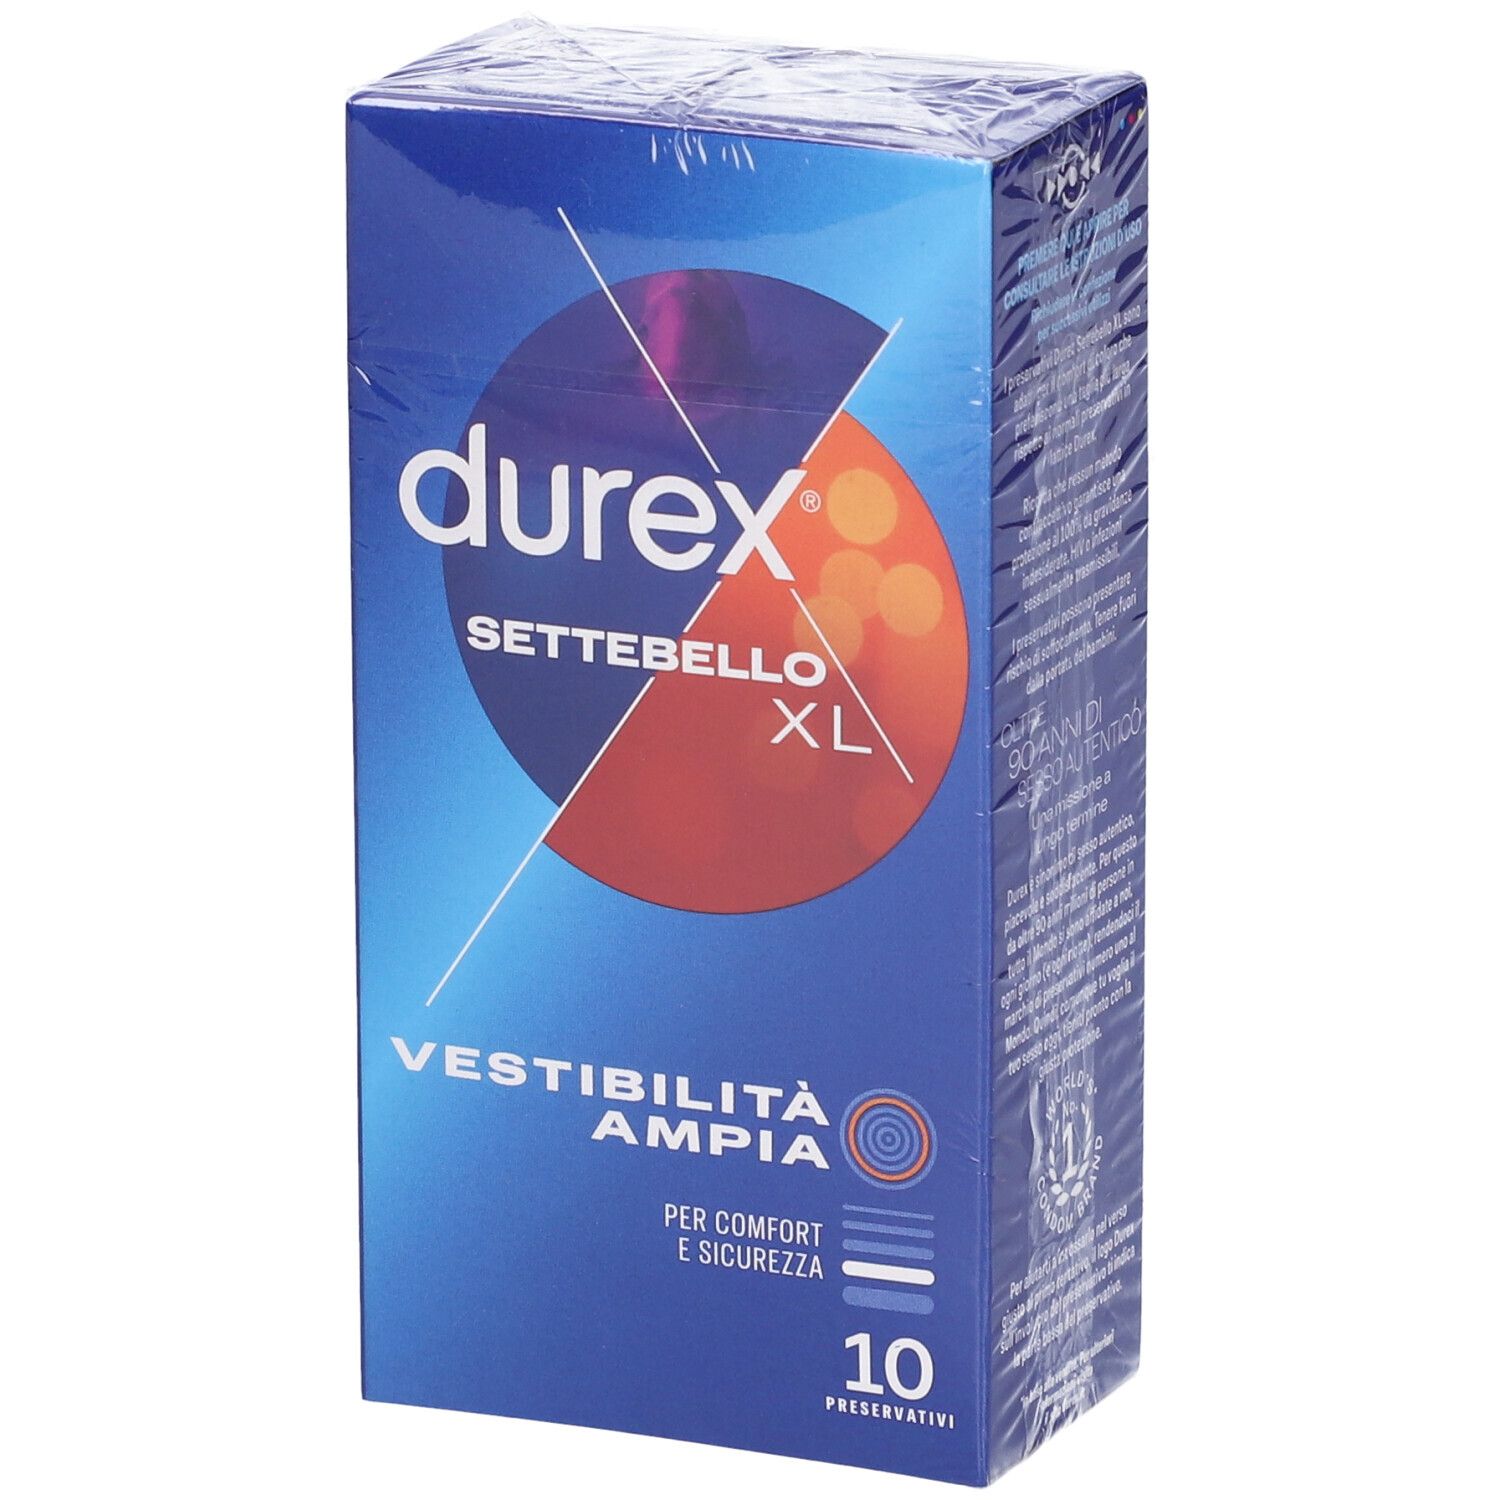 Image of Durex Settebello Preservativi Extralarge